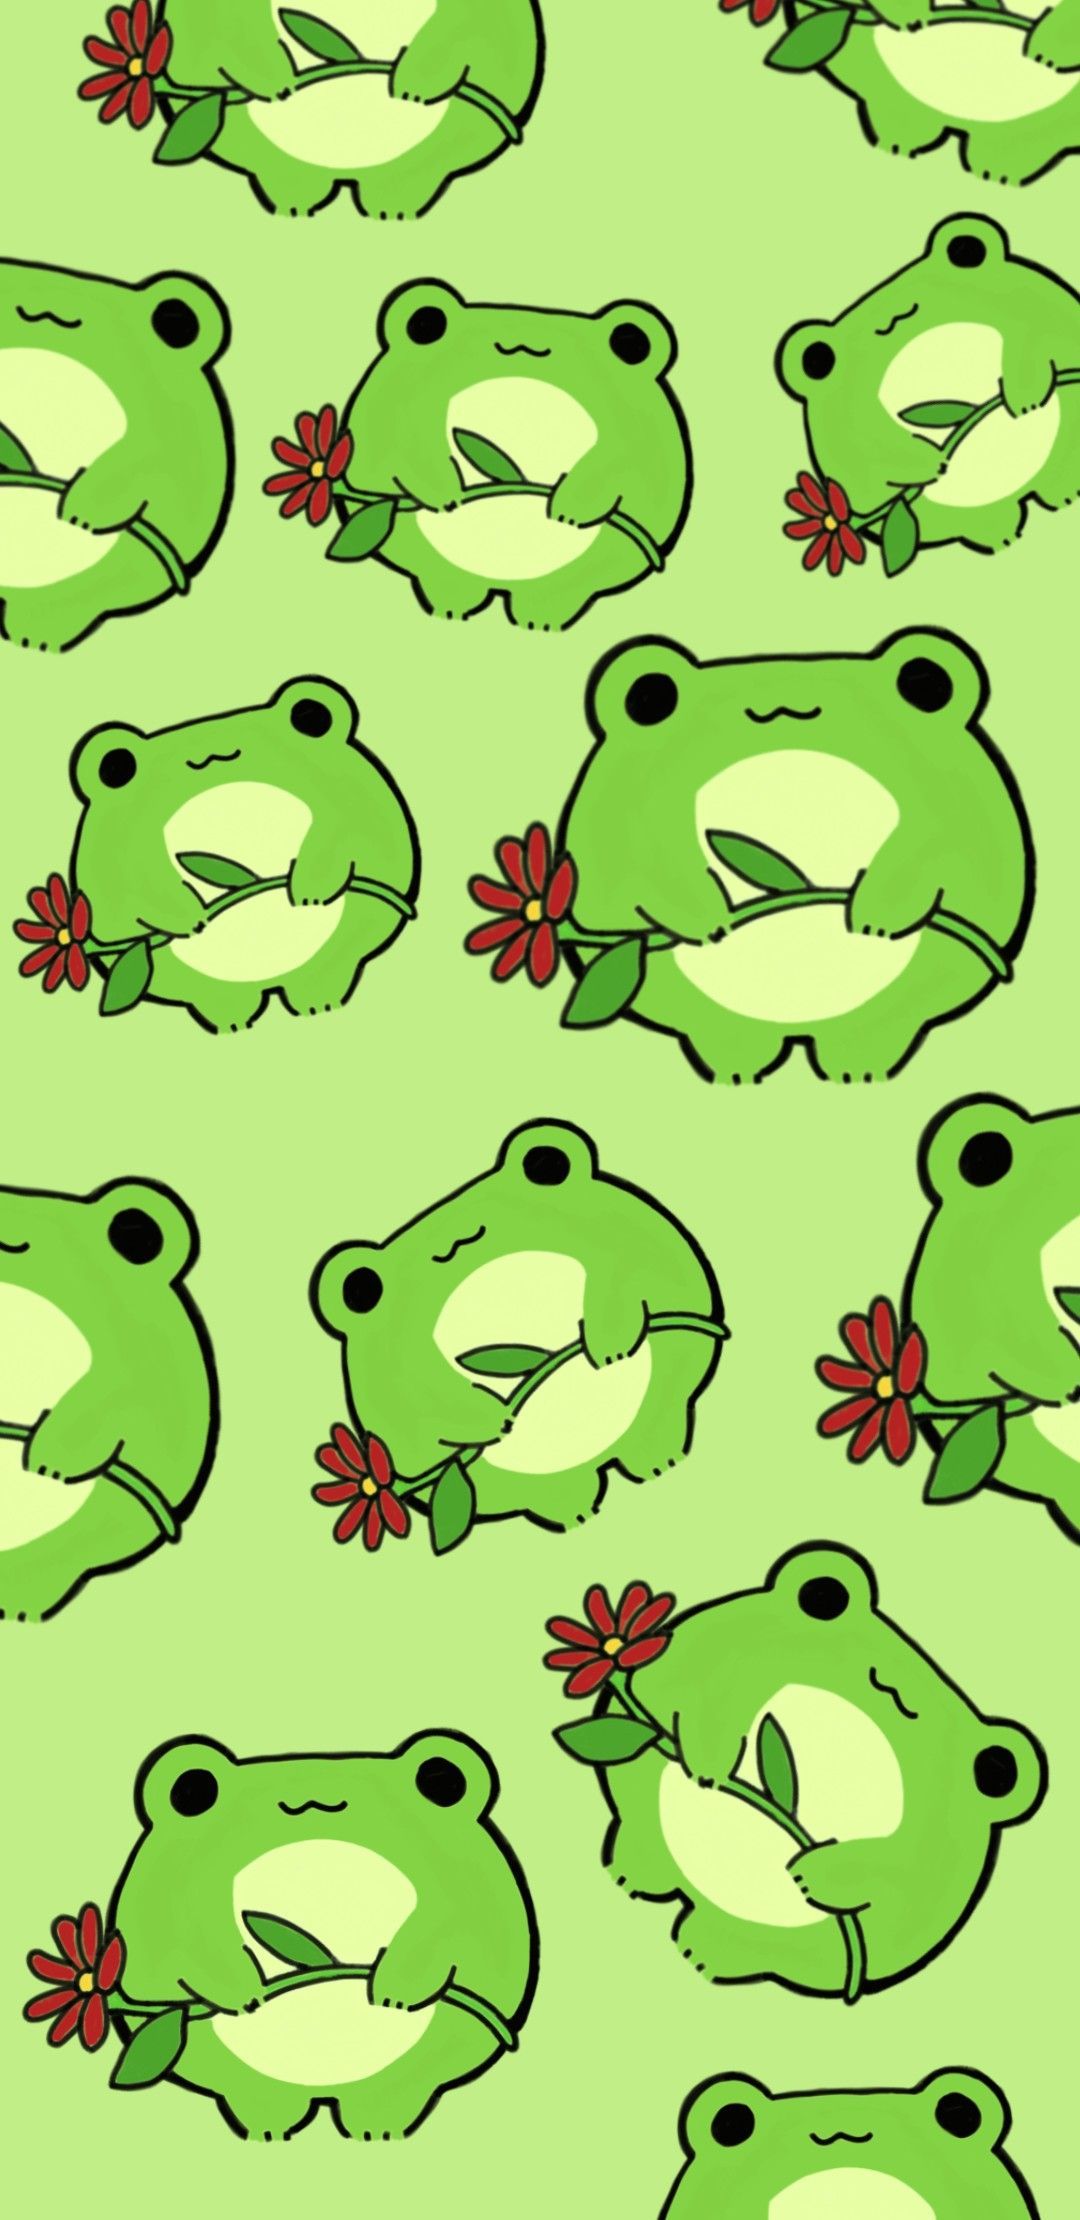 Frog wallpaper. Frog wallpaper, Pretty wallpaper background, Homescreen wallpaper